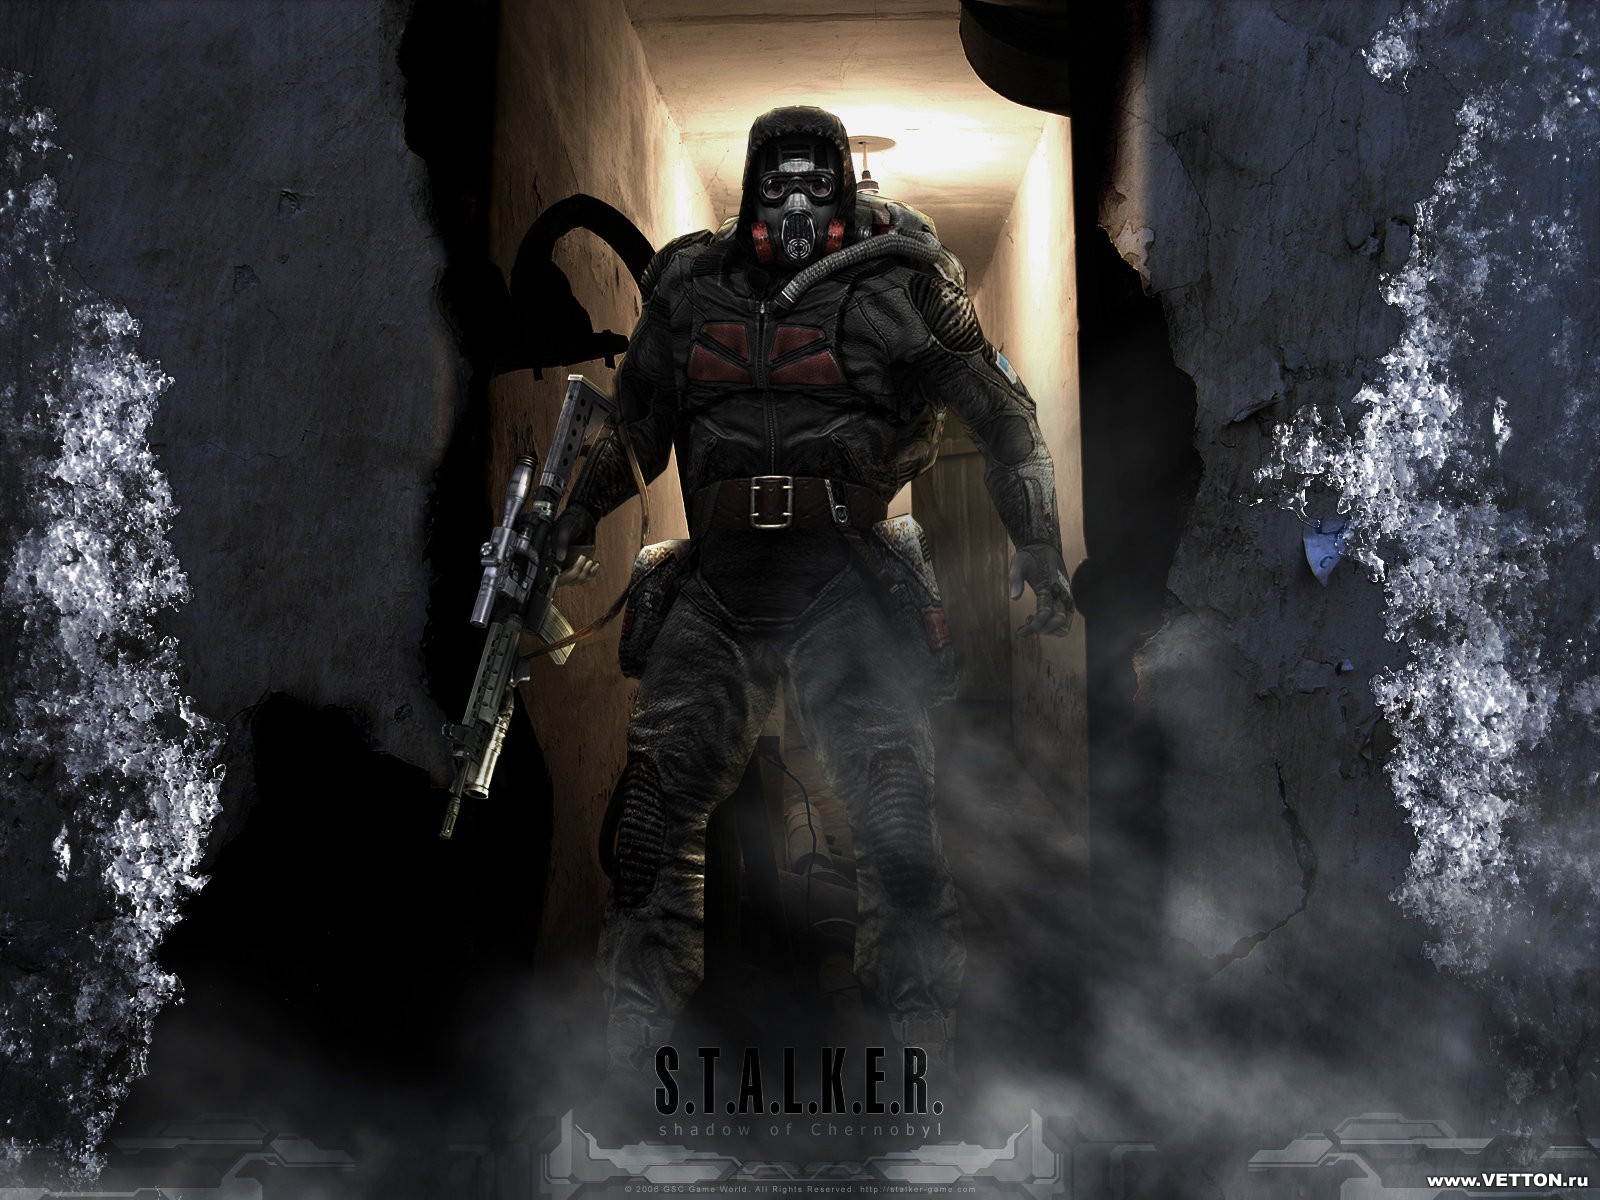 Download full size Stalker wallpaper / Games / 1600x1200